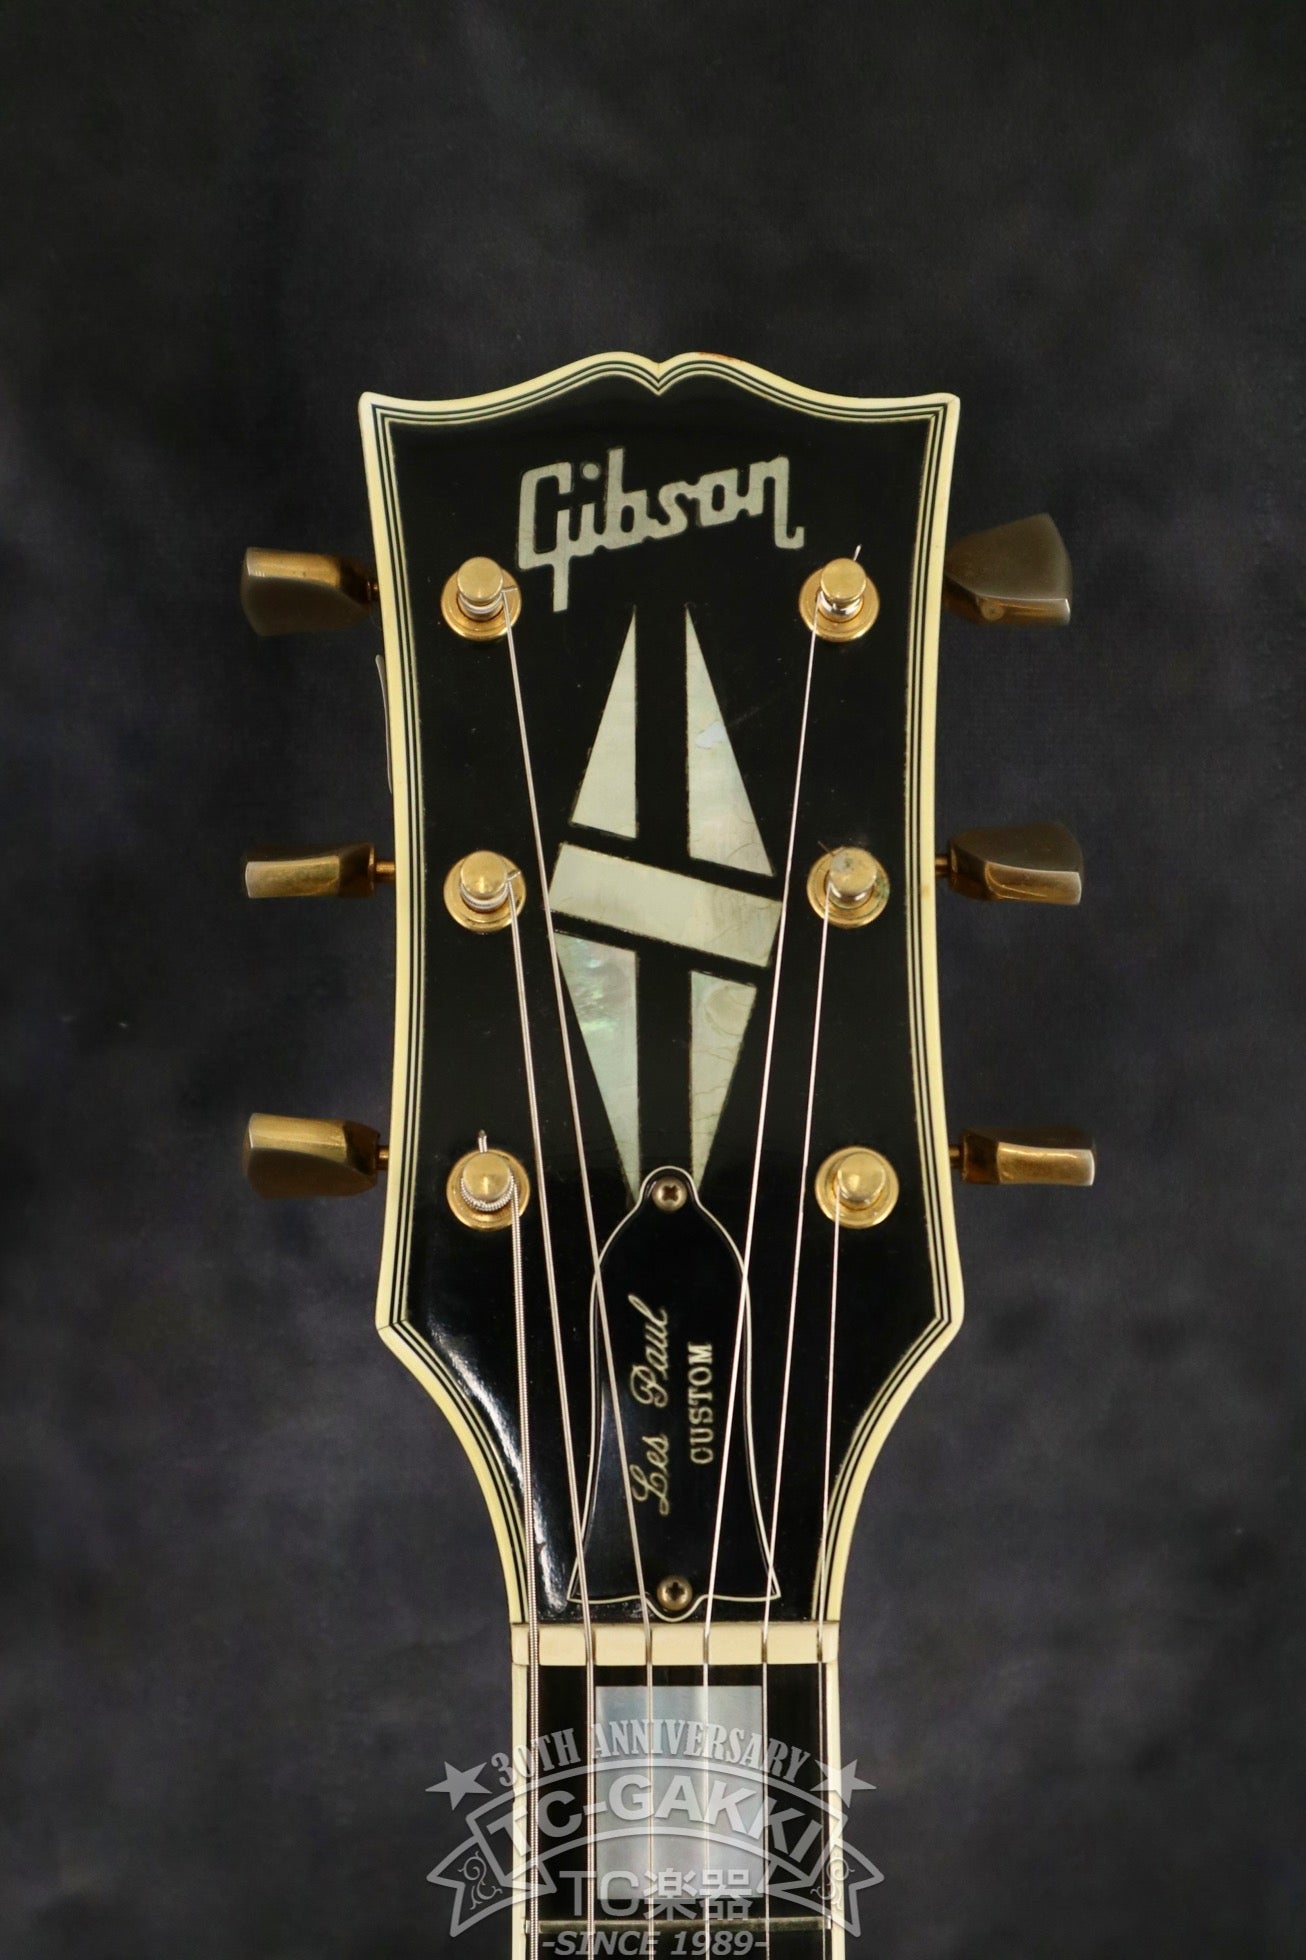 1972 Gibson Les Paul Custom - TC楽器 - TCGAKKI